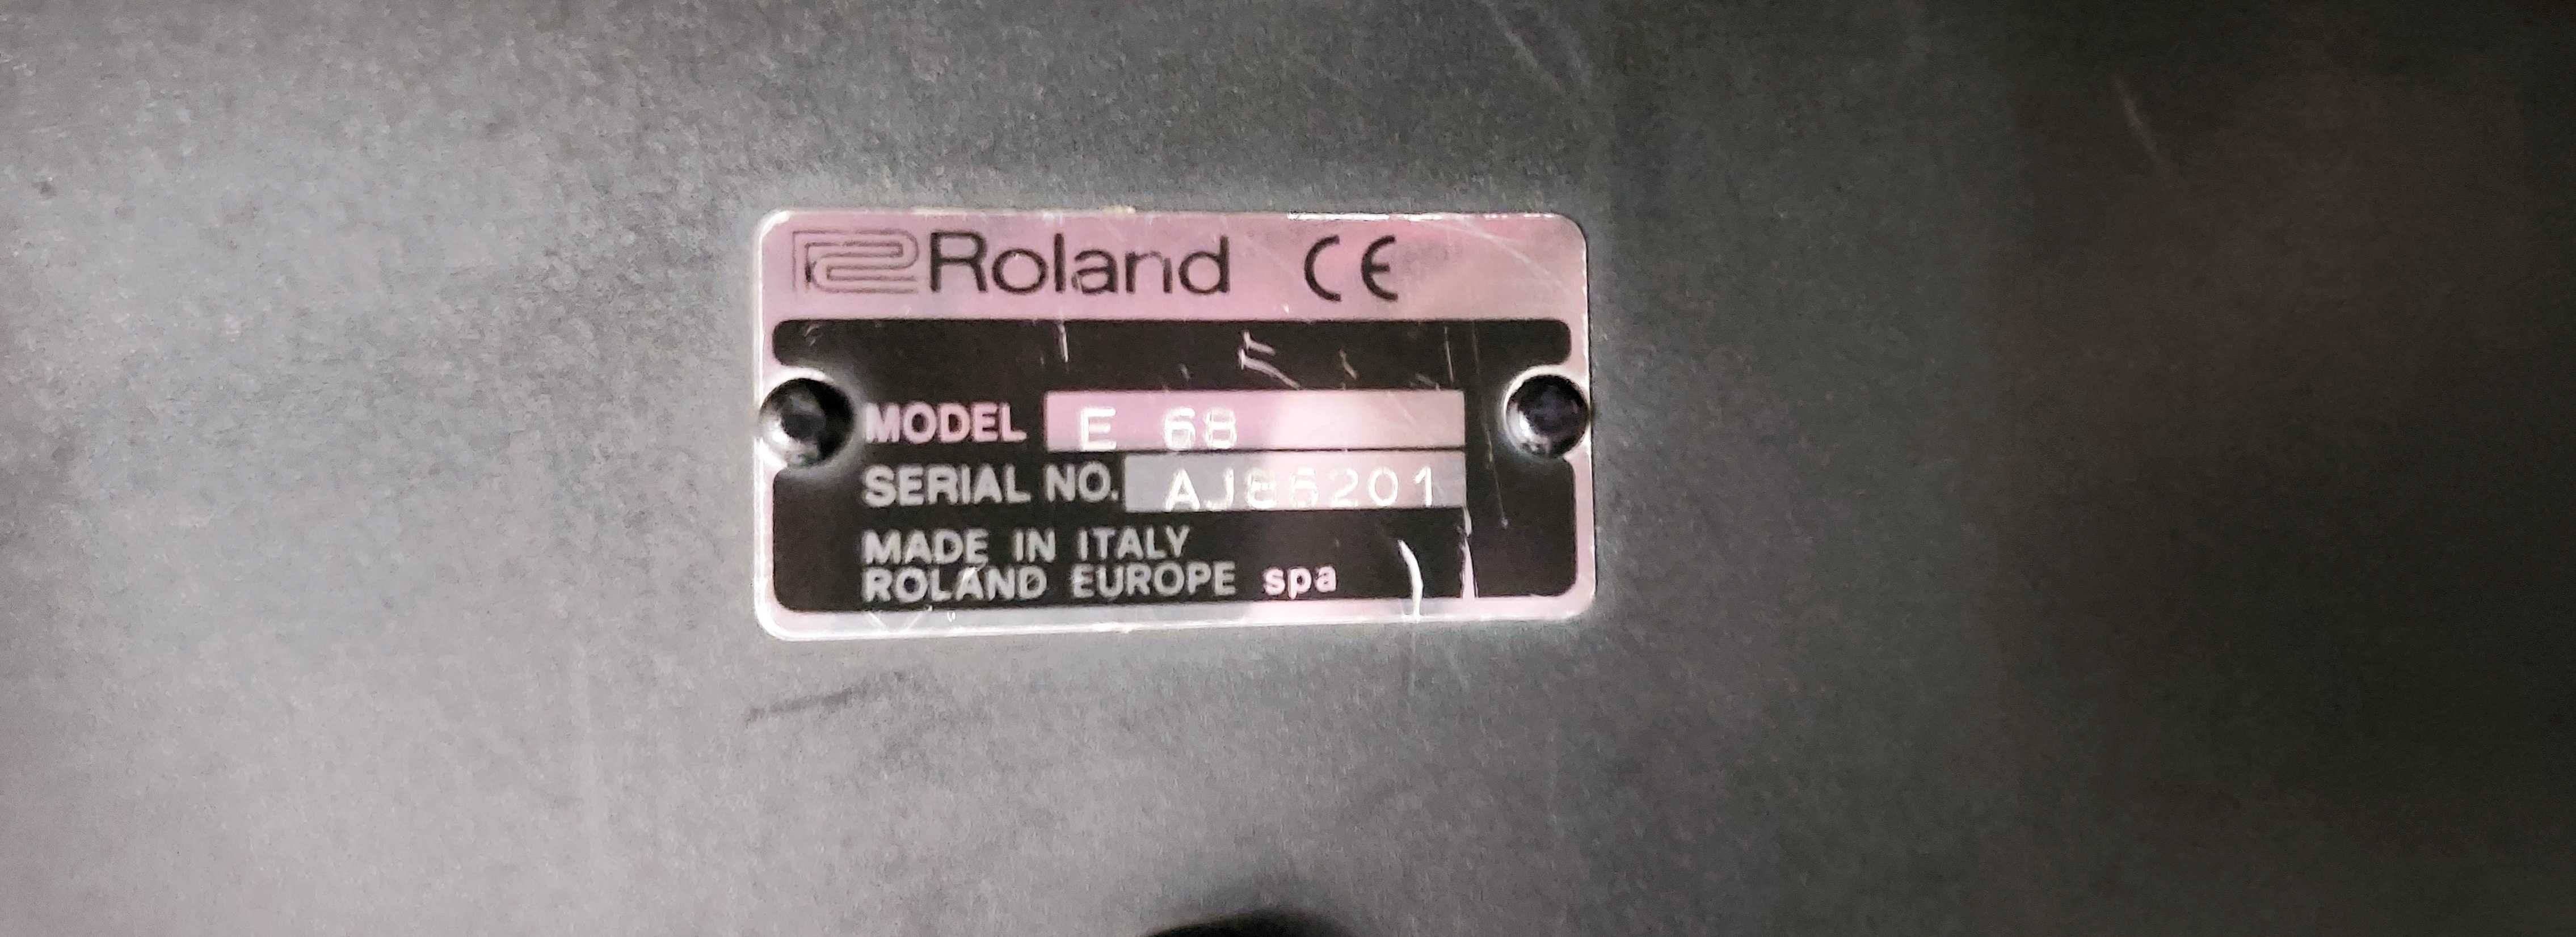 Roland E-68 з блоком живлення